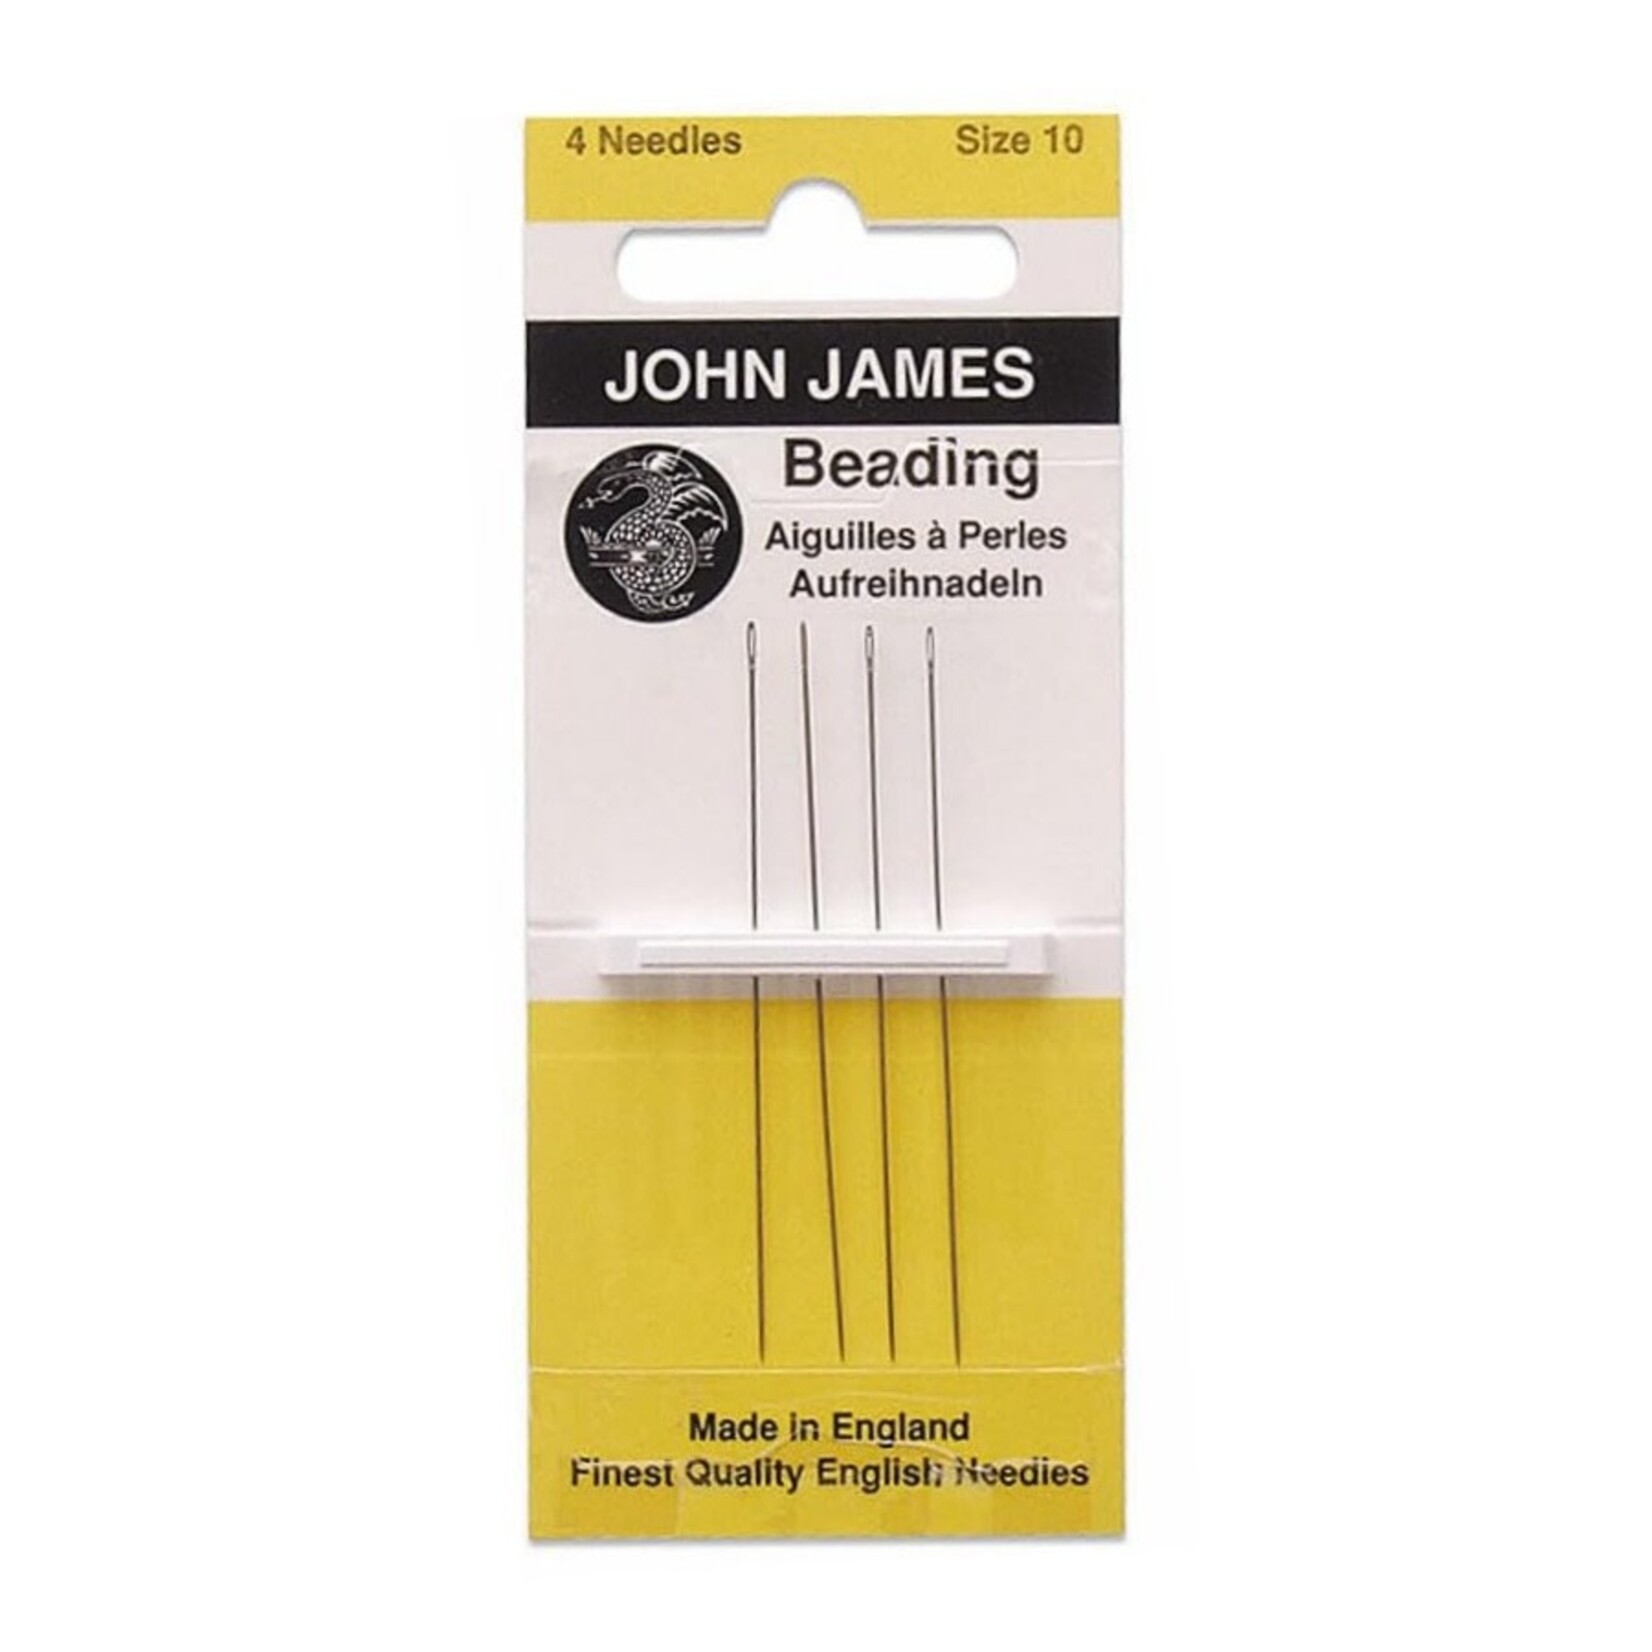 John James Beading Needle Size 10, Pack of 4 - Box of 12 Packs